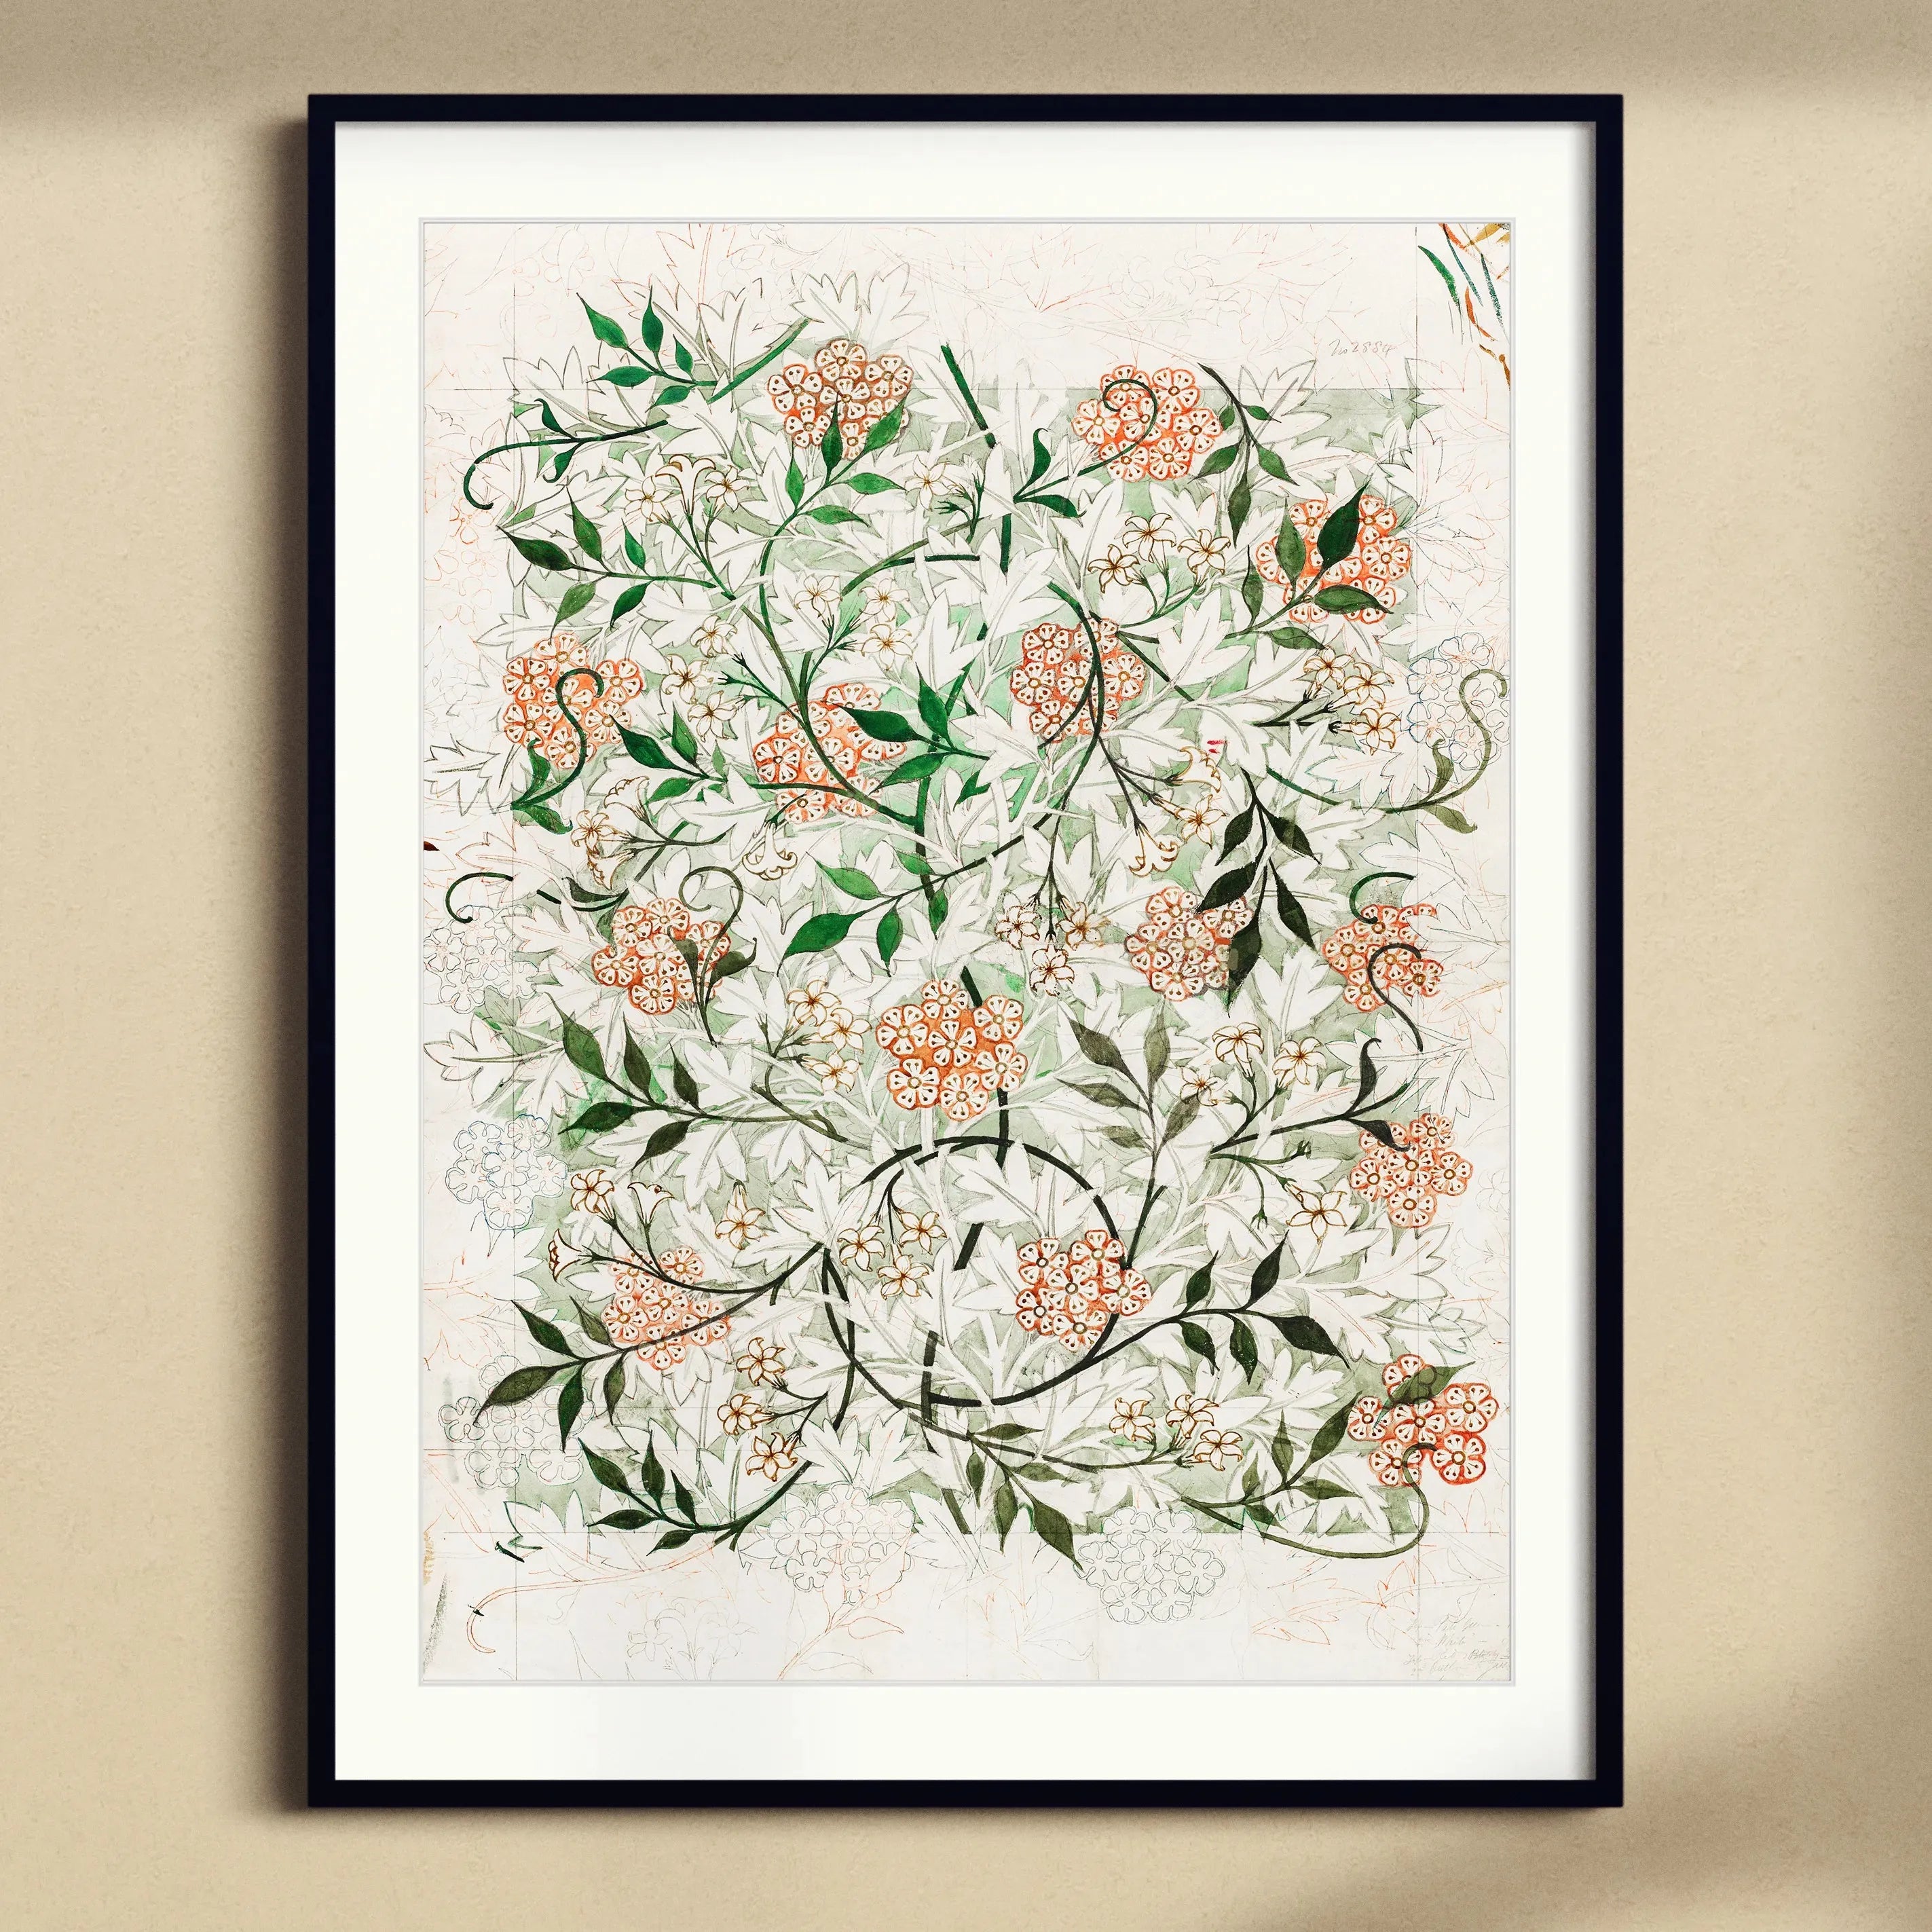 Jasmine - William Morris Framed & Mounted Print - Posters Prints & Visual Artwork - Aesthetic Art